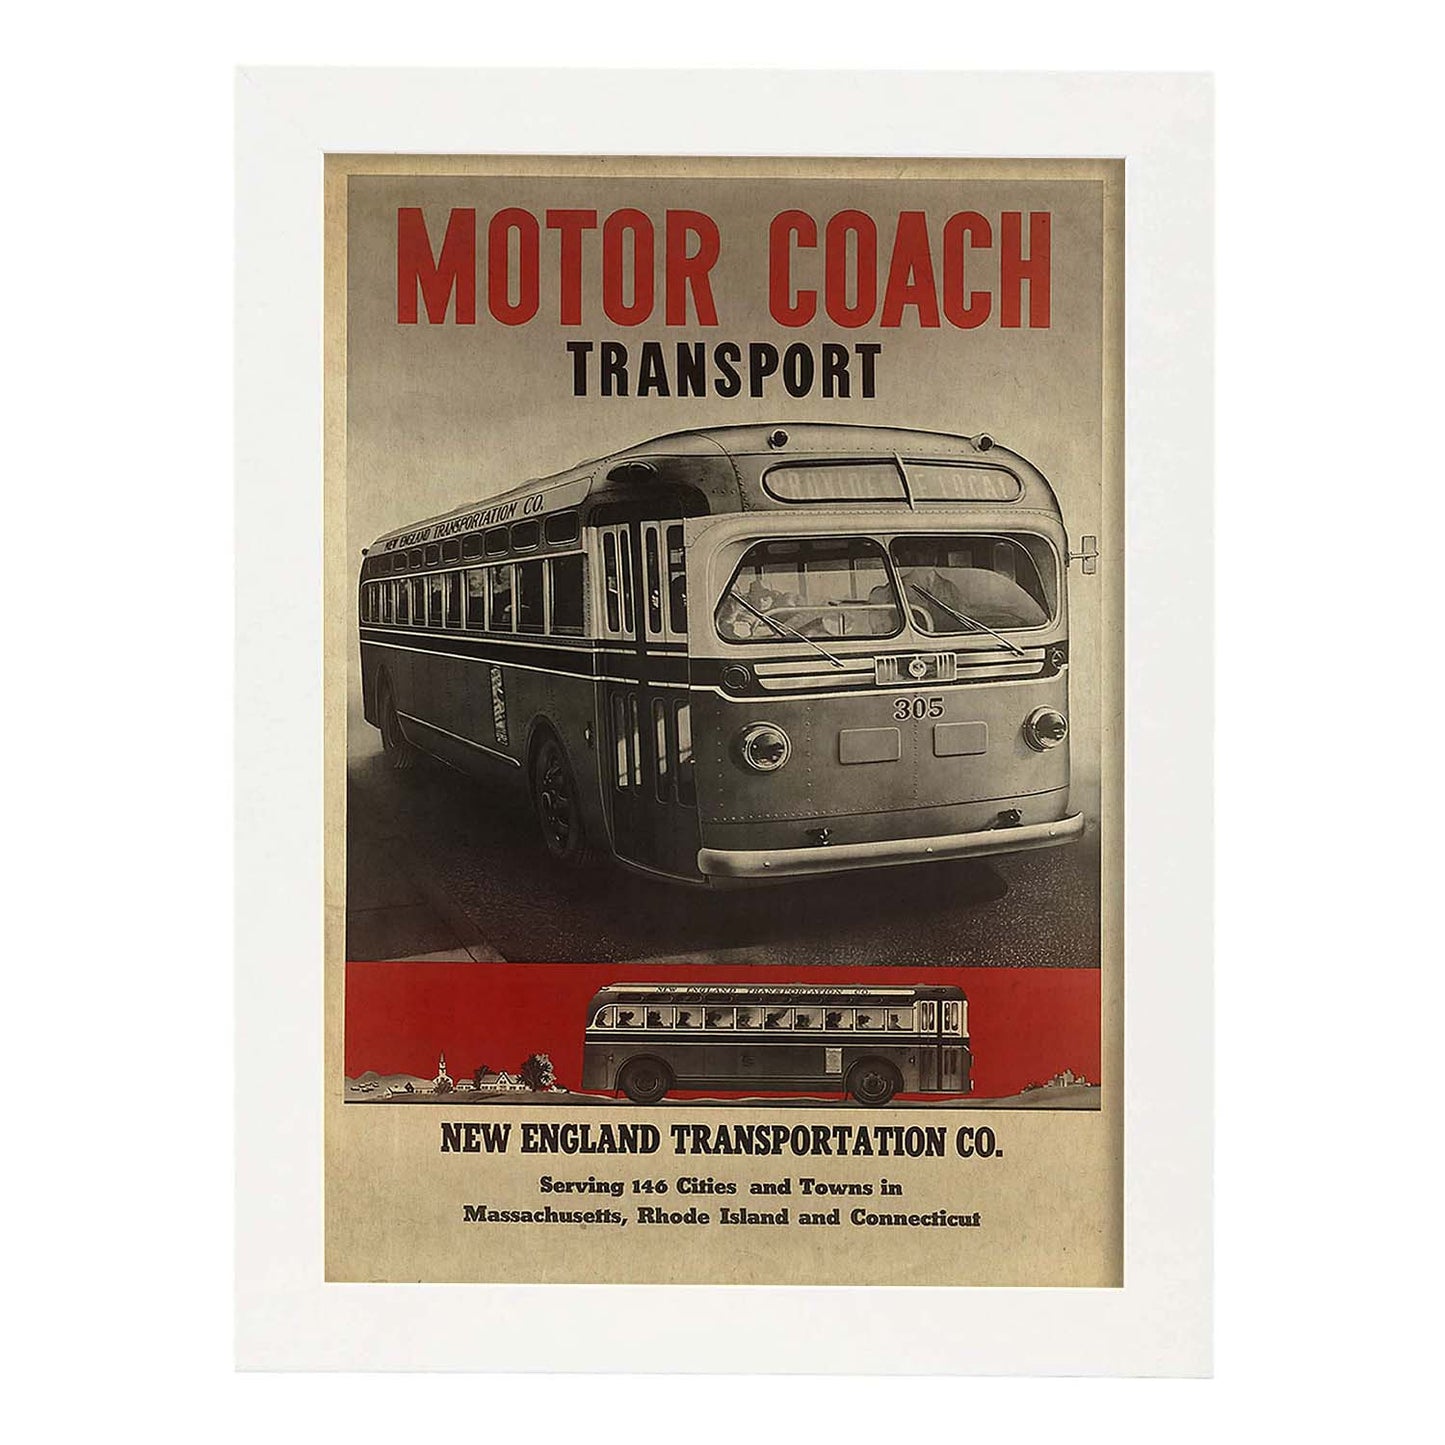 Poster vintage. Cartel vintage Motor Coach Transport de 1940.-Artwork-Nacnic-A3-Marco Blanco-Nacnic Estudio SL